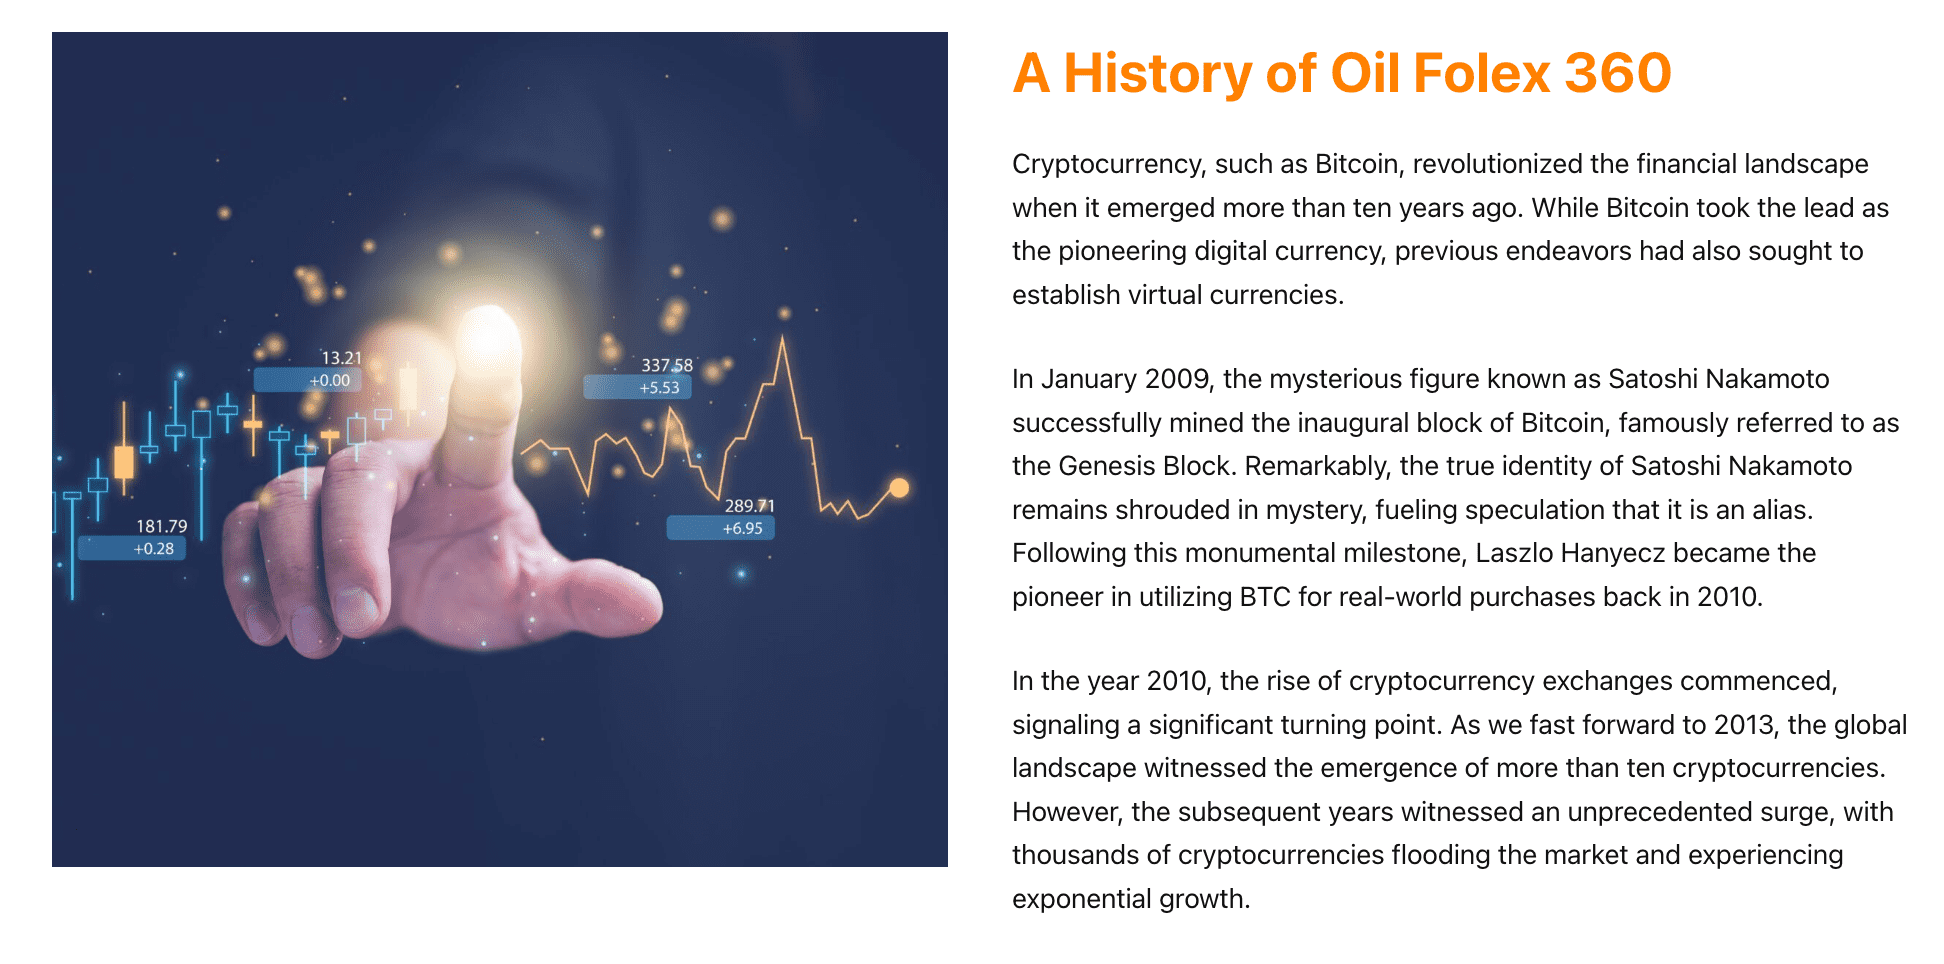 A History of Oil Folex 360